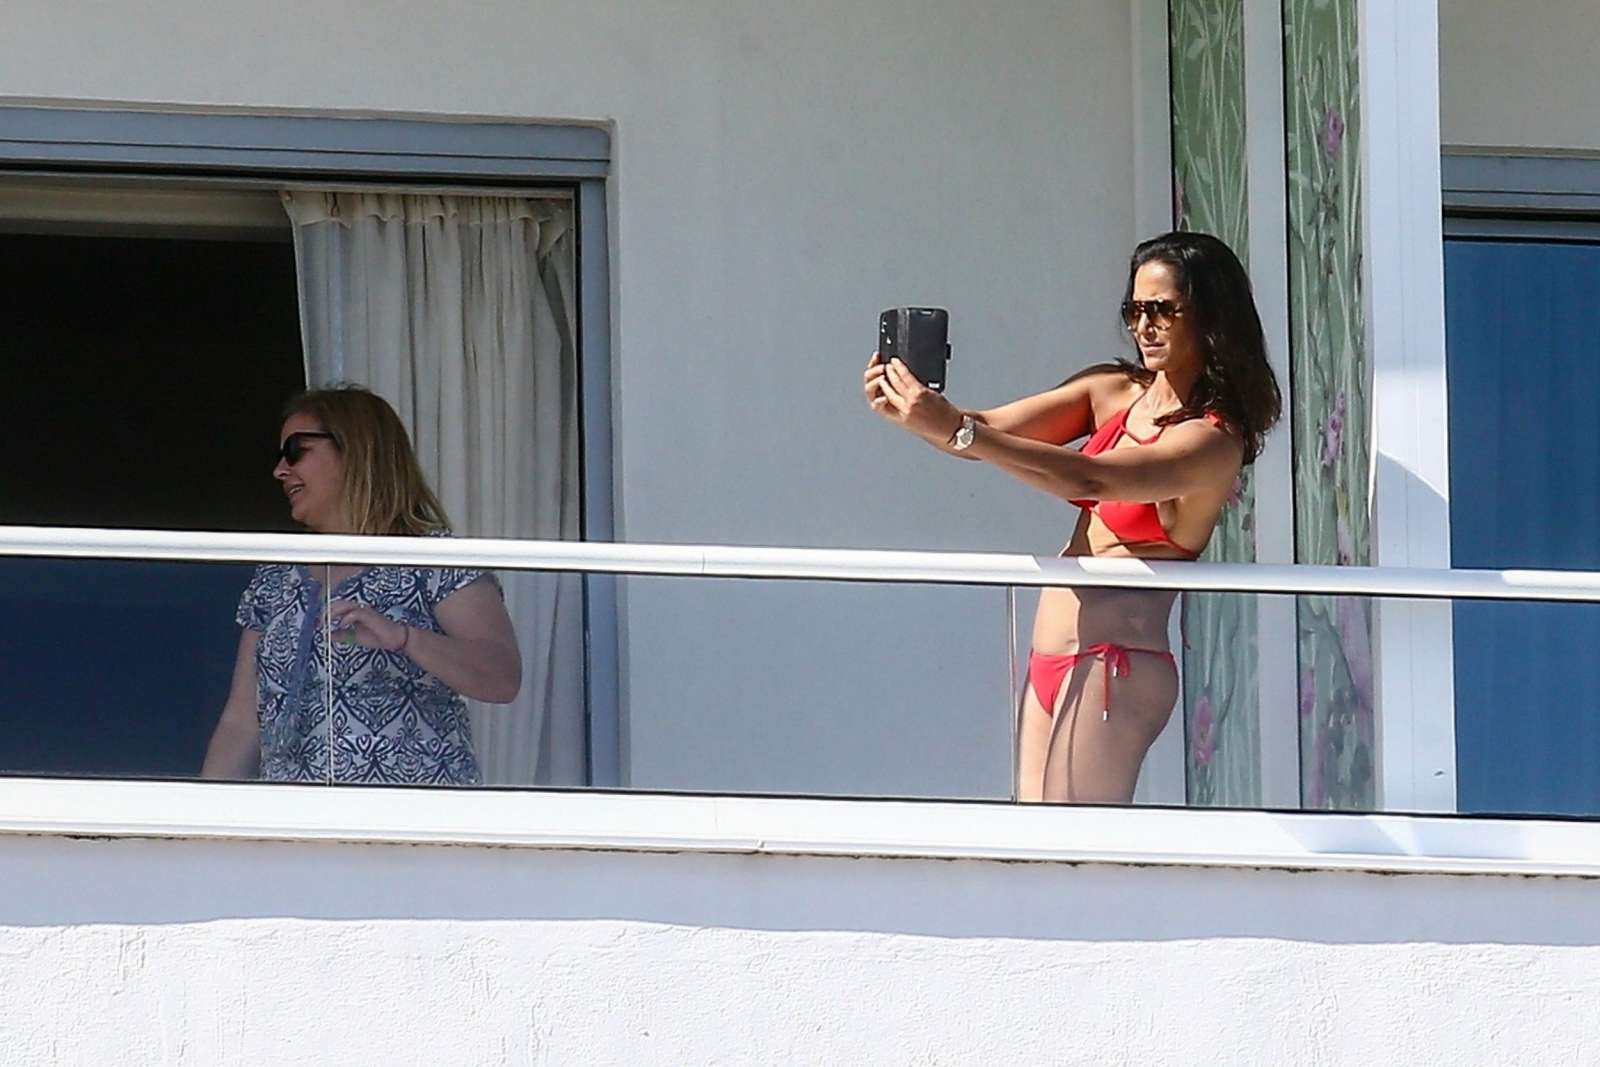 Padma Lakshmi in Red Bikini on her hotel balcony in Miami